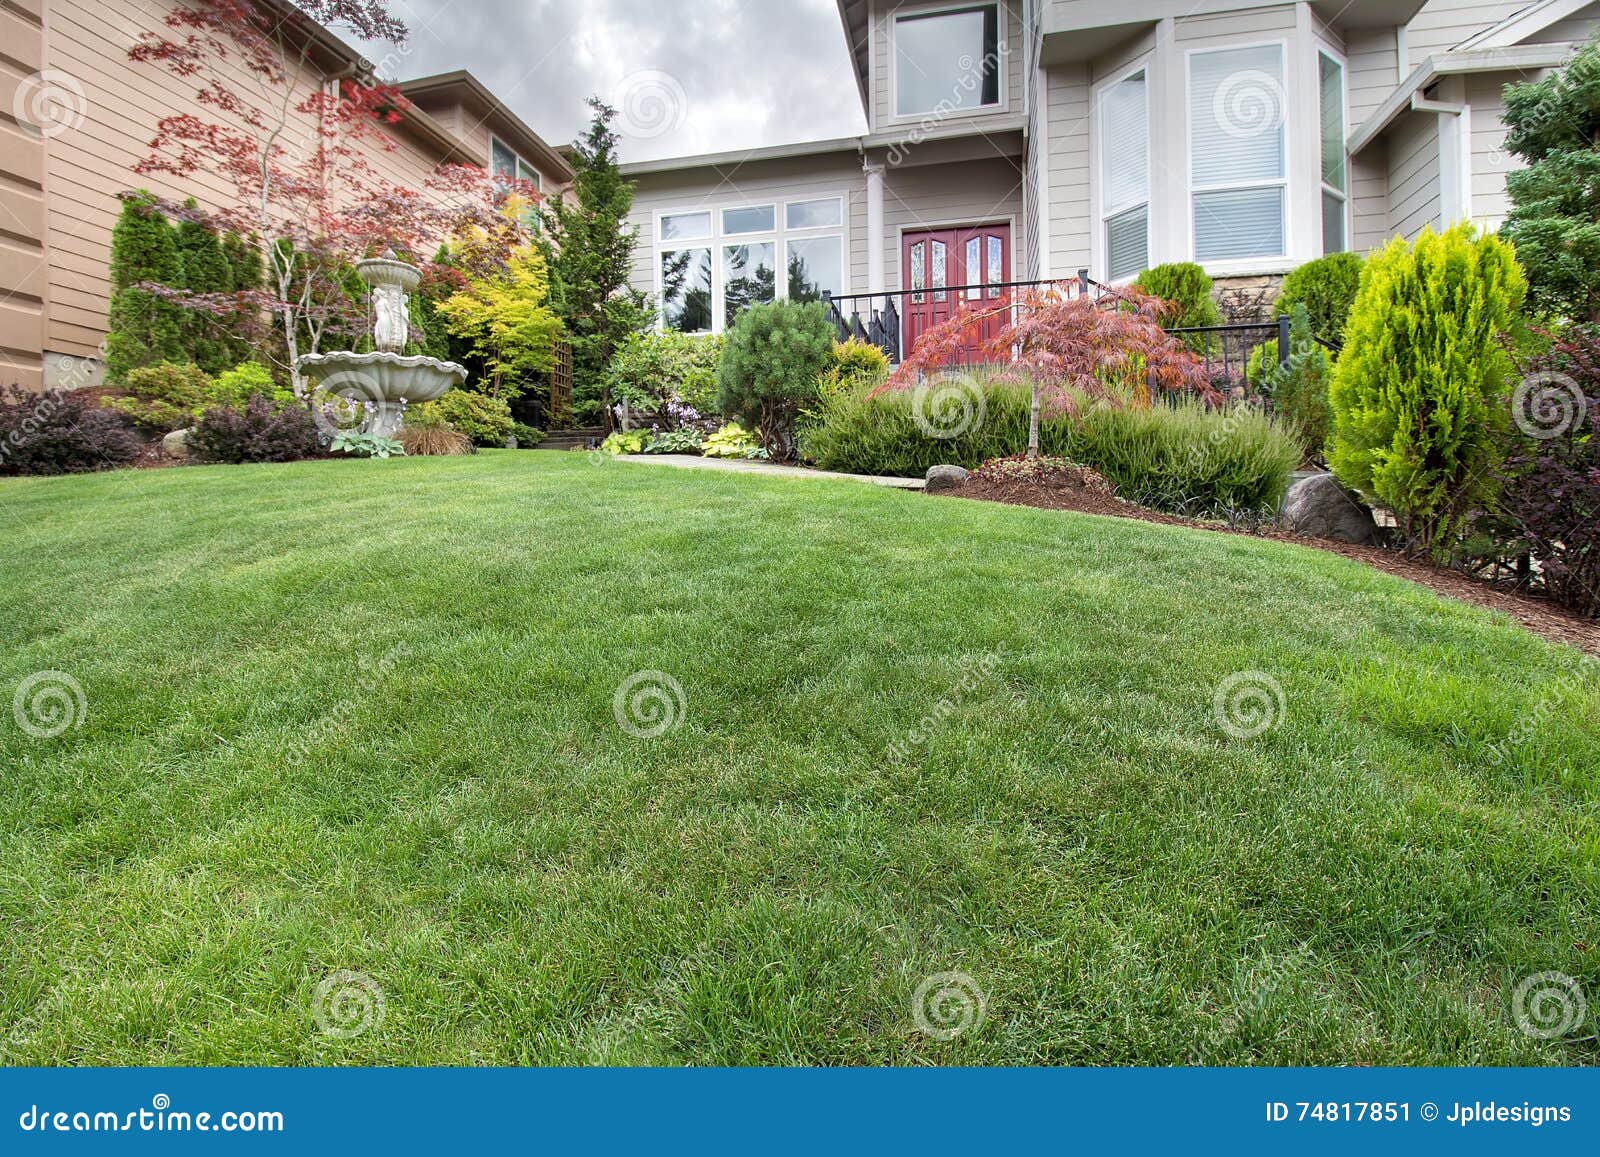 green grass lawn in manicured frontyard garden